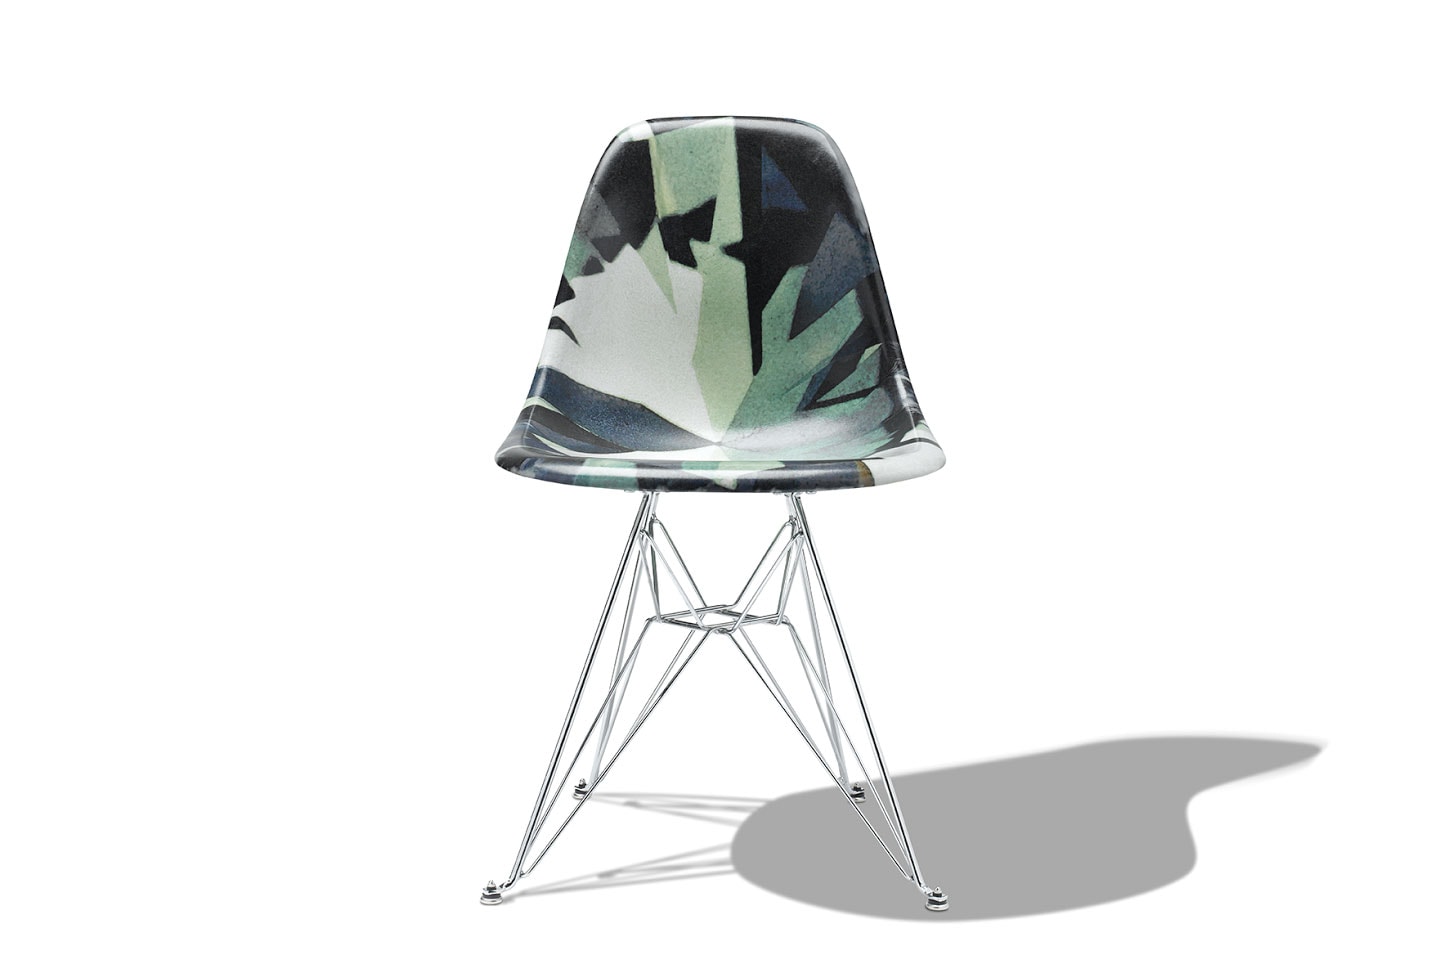 Diamond Supply Co. x Modernica Chair